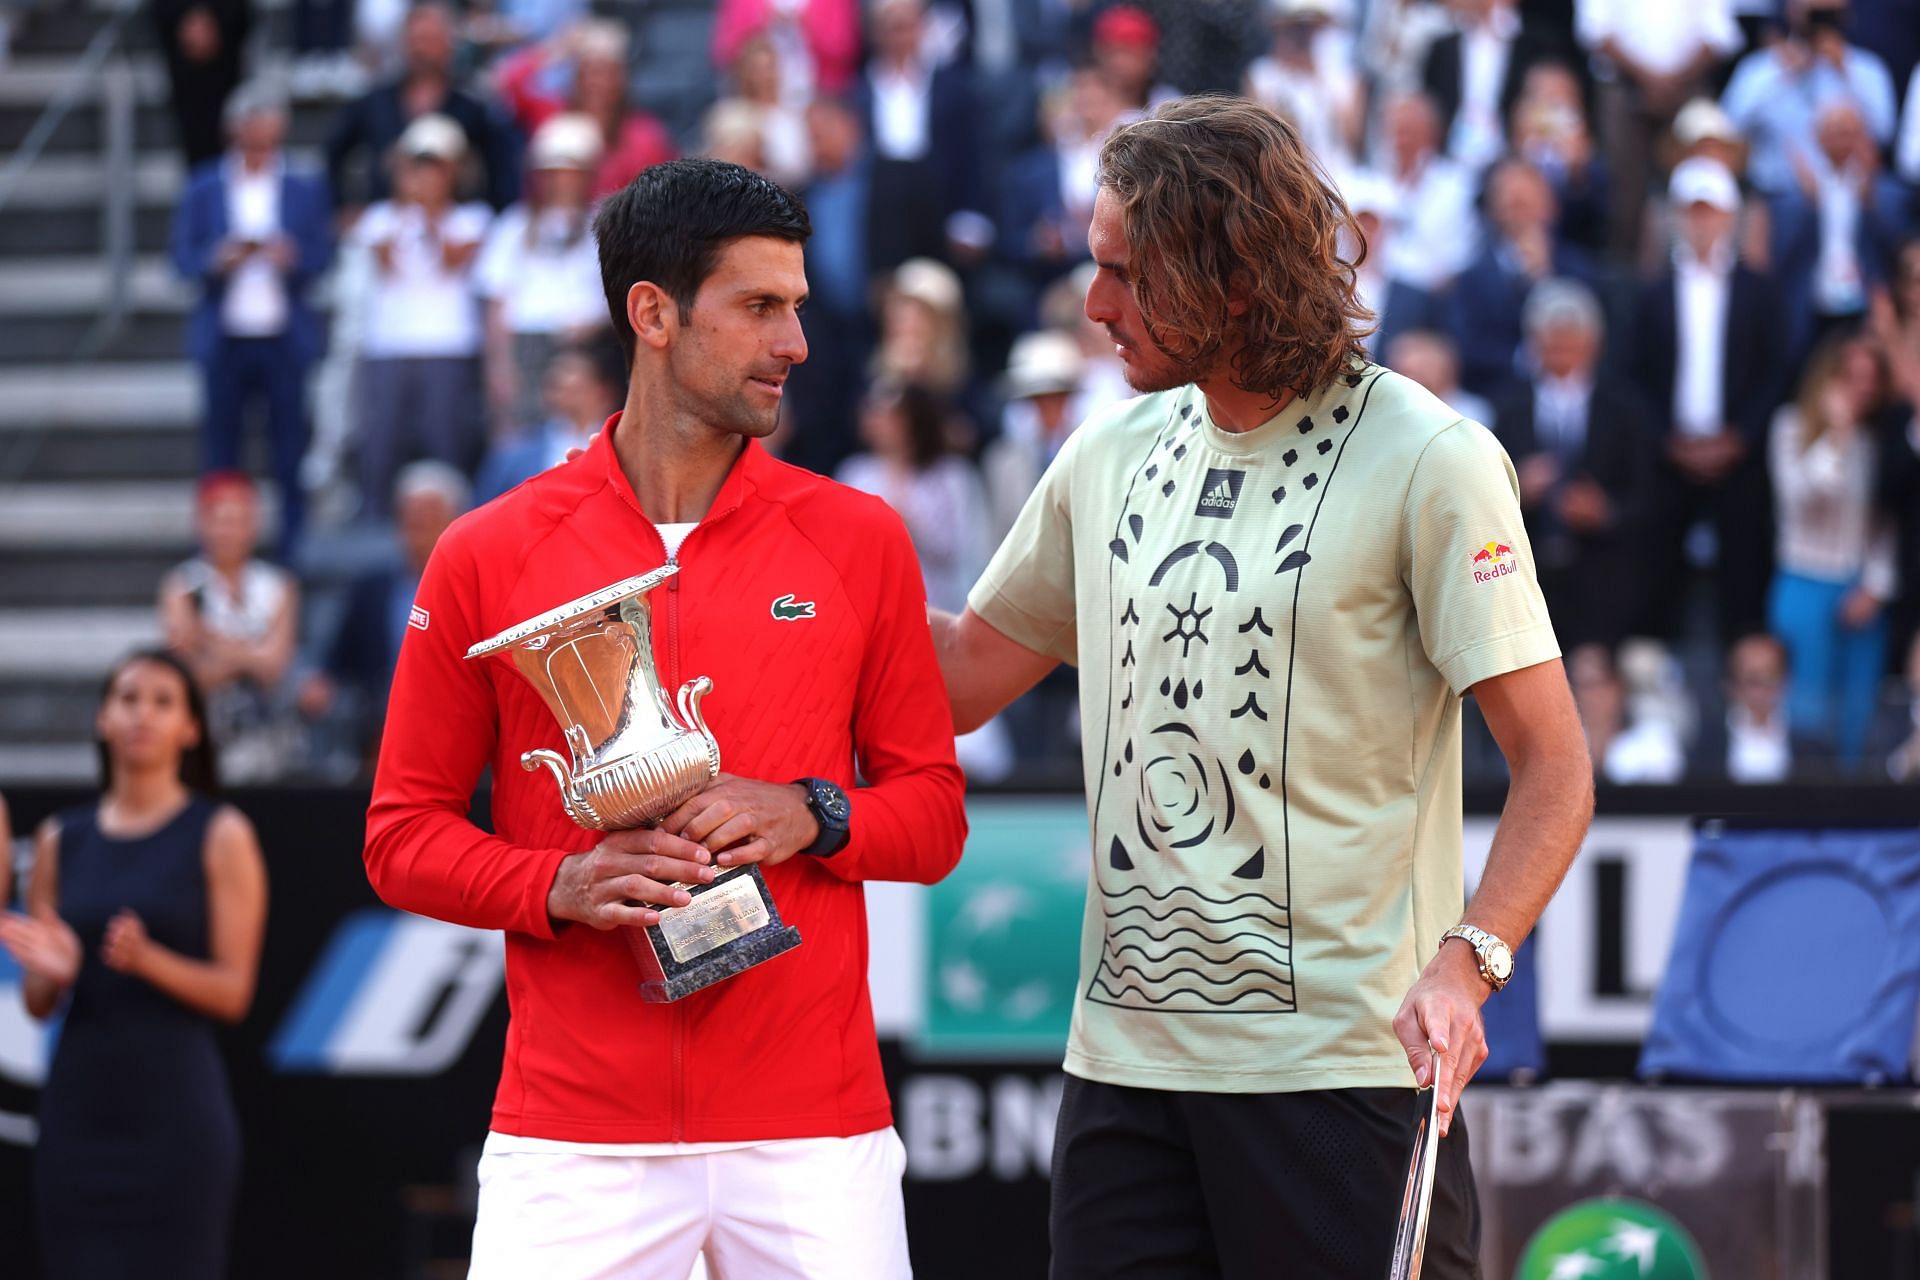 Novak Djokovic beat Stefanos Tsitsipas in the final of the Italian Open